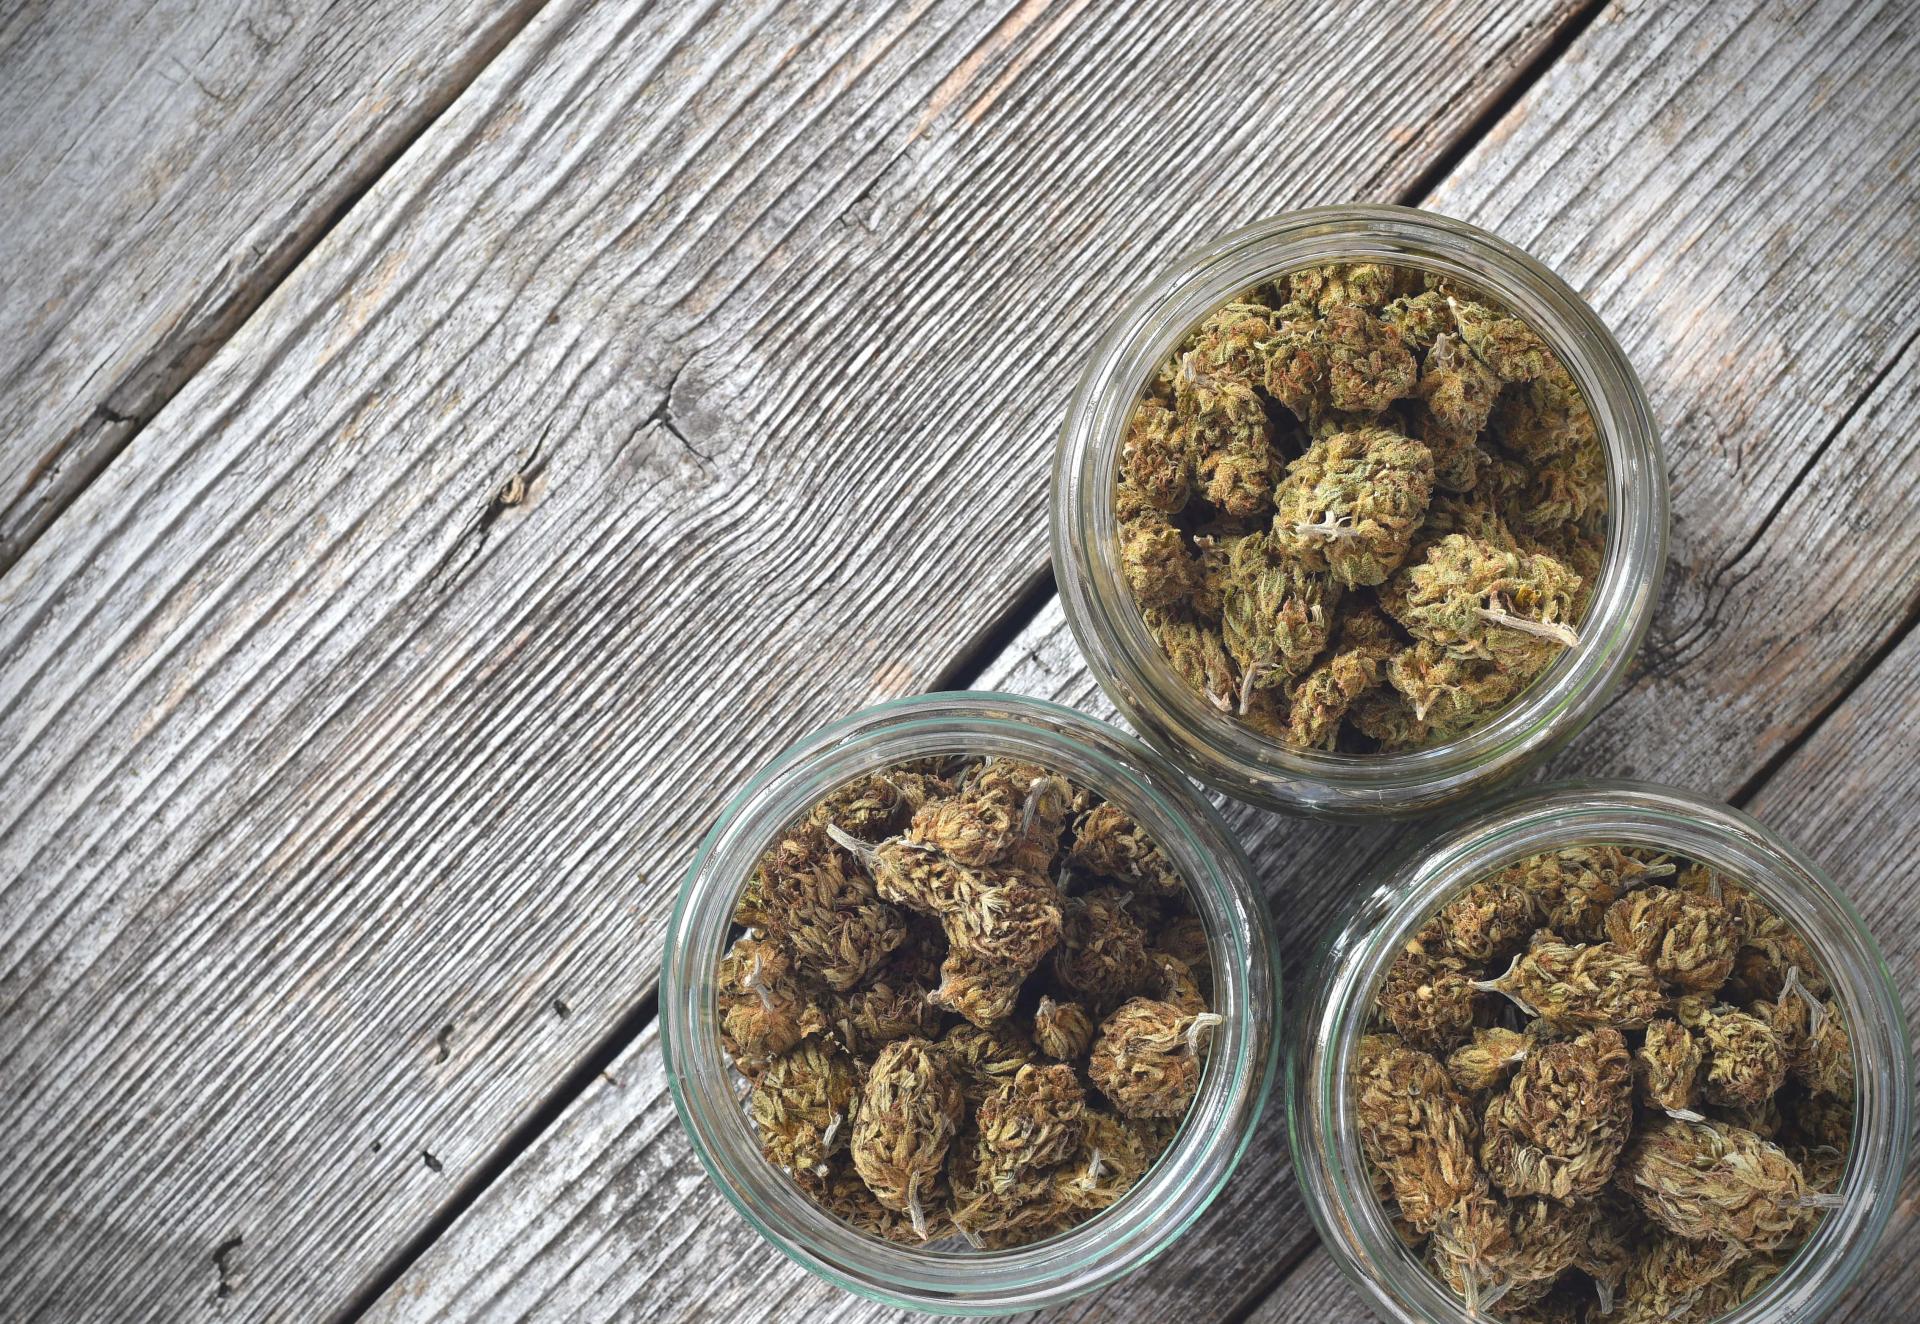 Trimmed Cannabis in a Jar